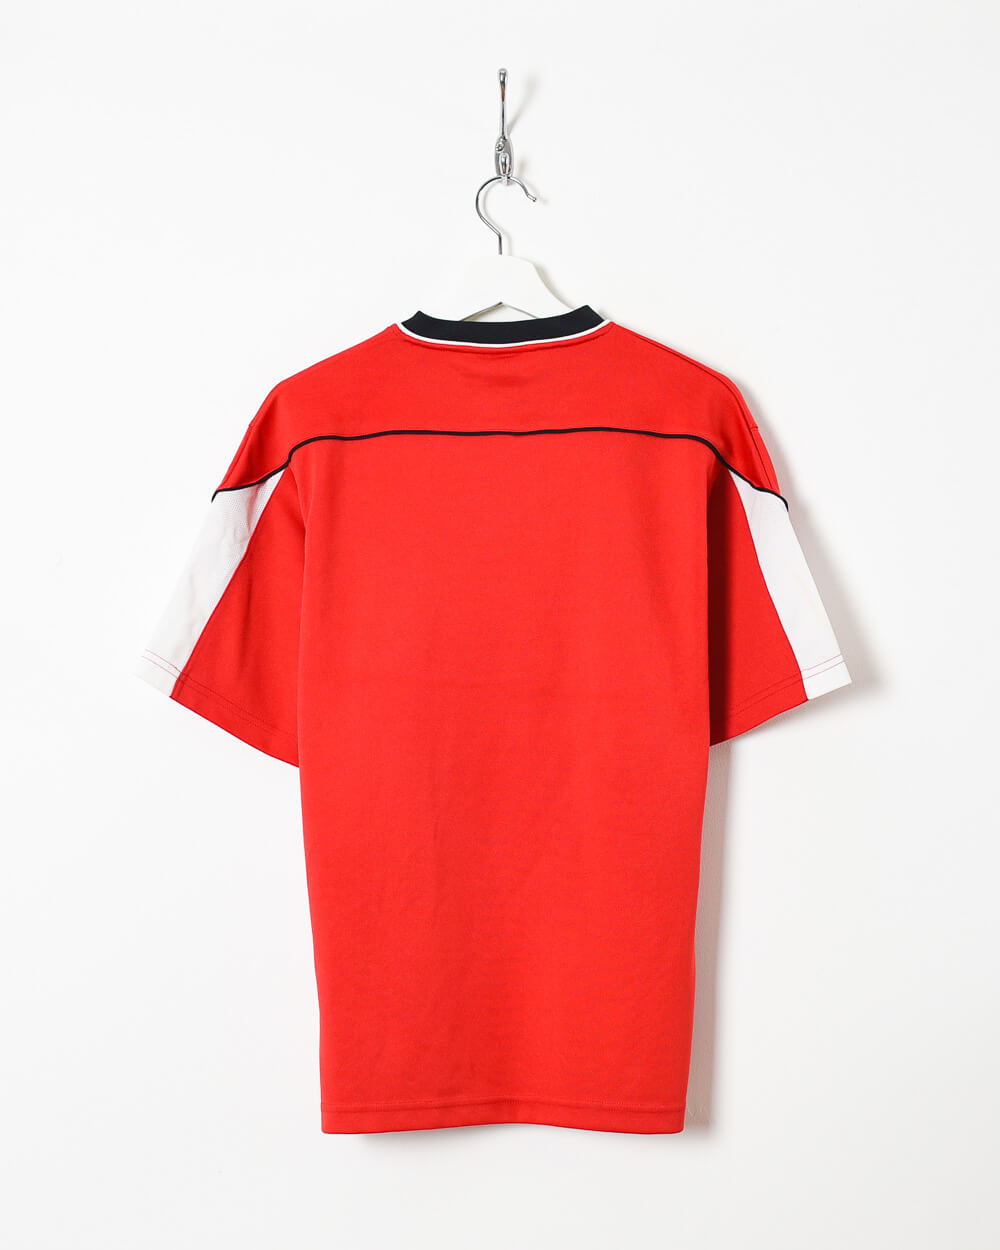 Red Le Coq Sportif T-Shirt - Medium